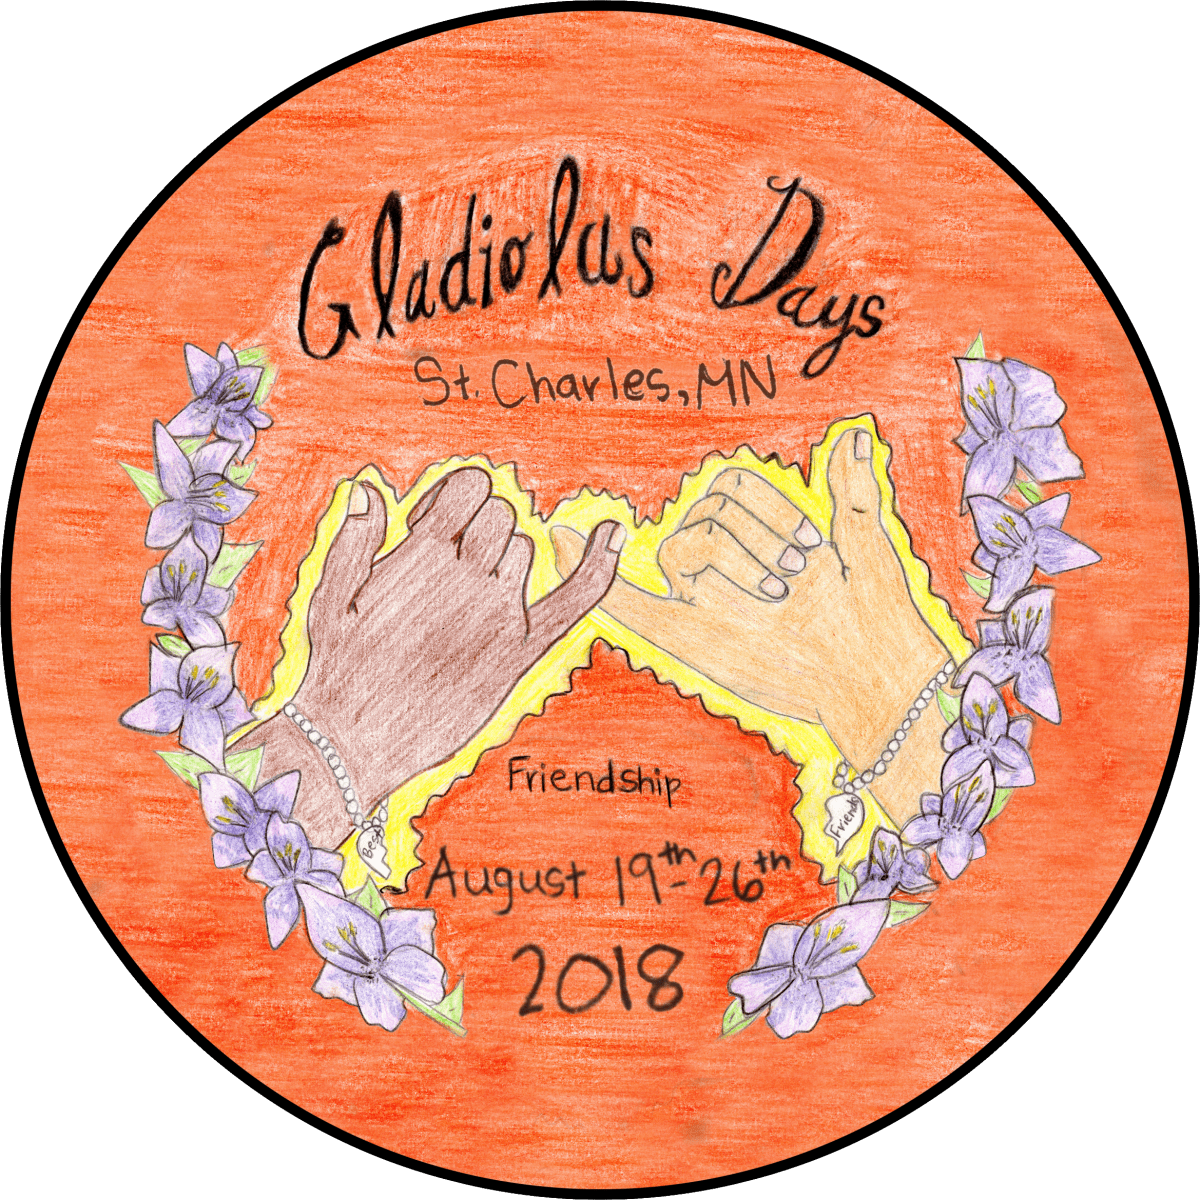 Gladiolus Days 2018 Large Format City of St. Charles, Minnesota